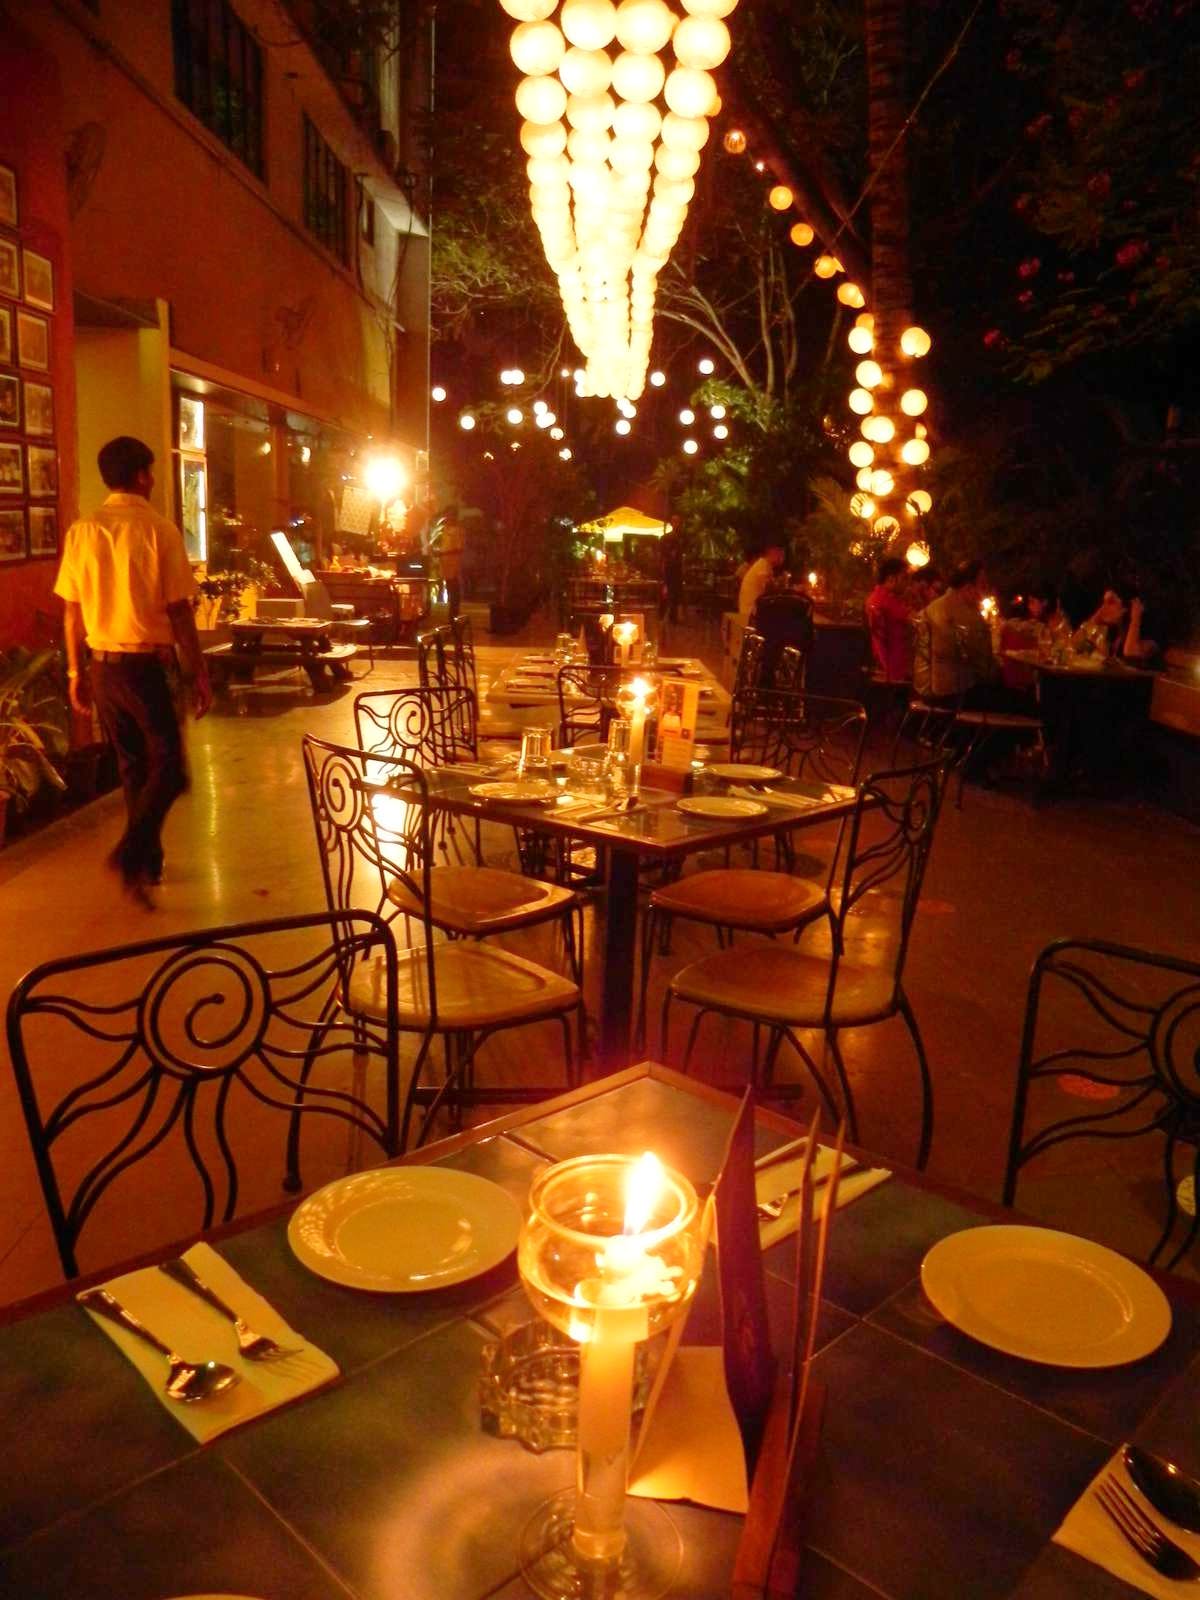 Lighting,Lantern,Table,Restaurant,Lighting accessory,Light fixture,Interior design